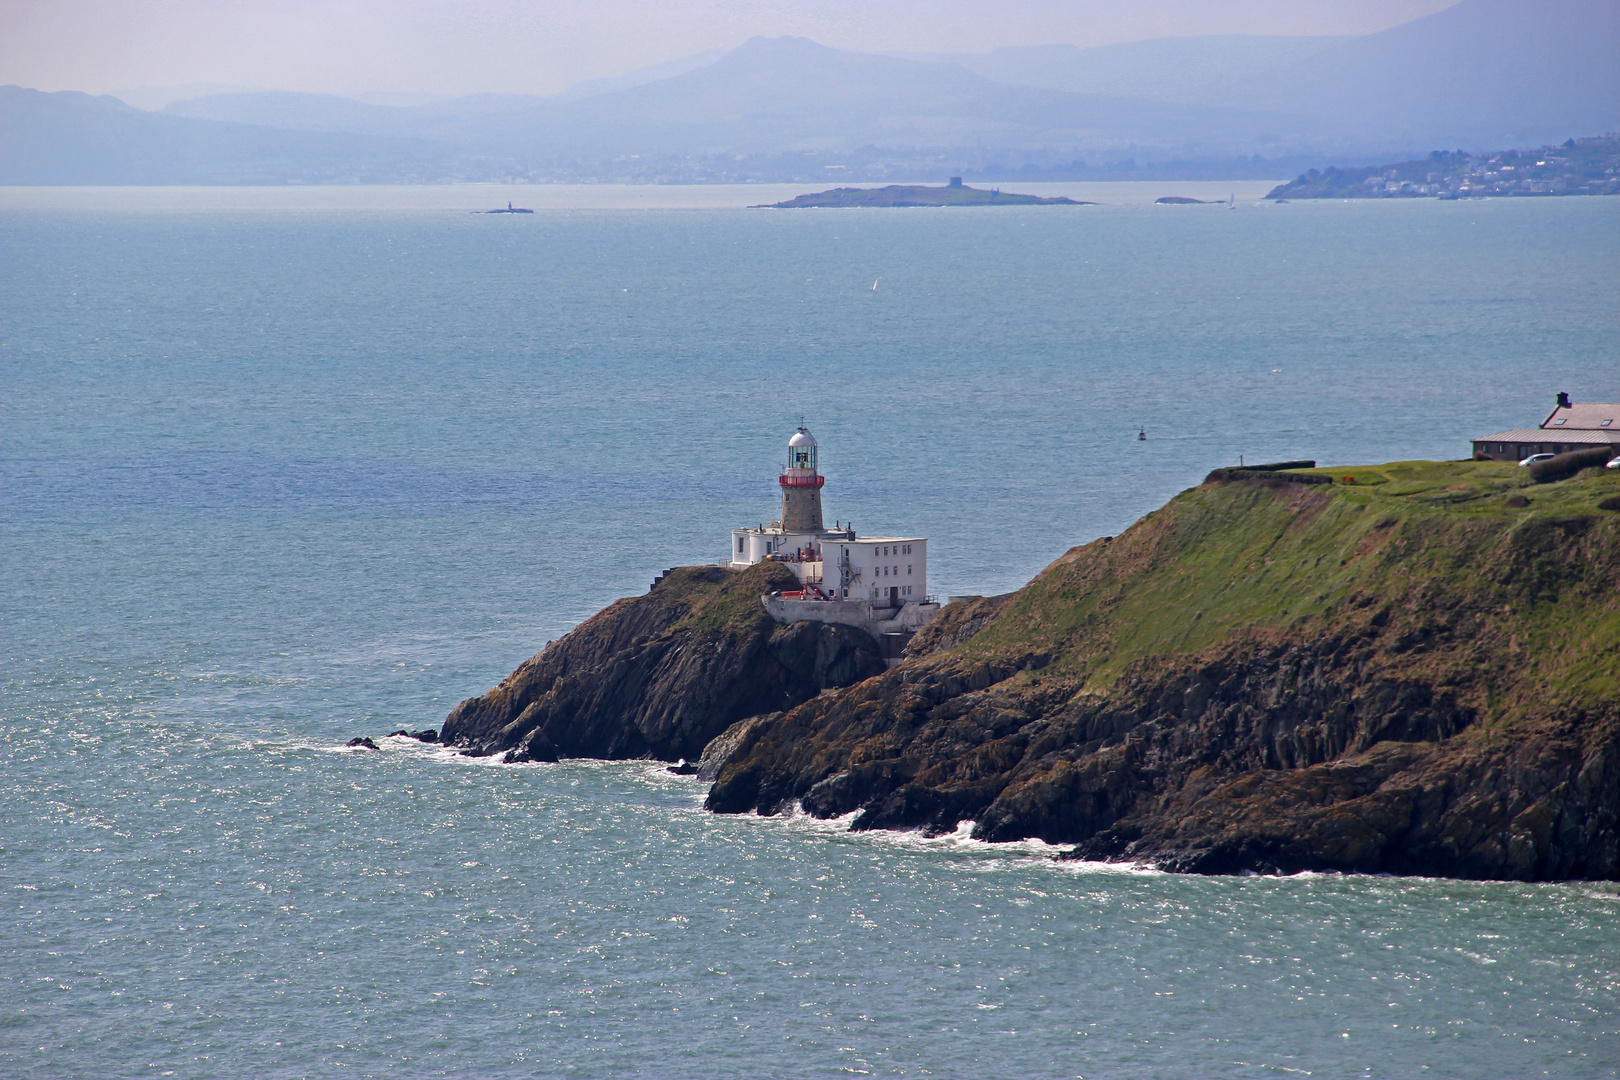 The Baily Lighthouse